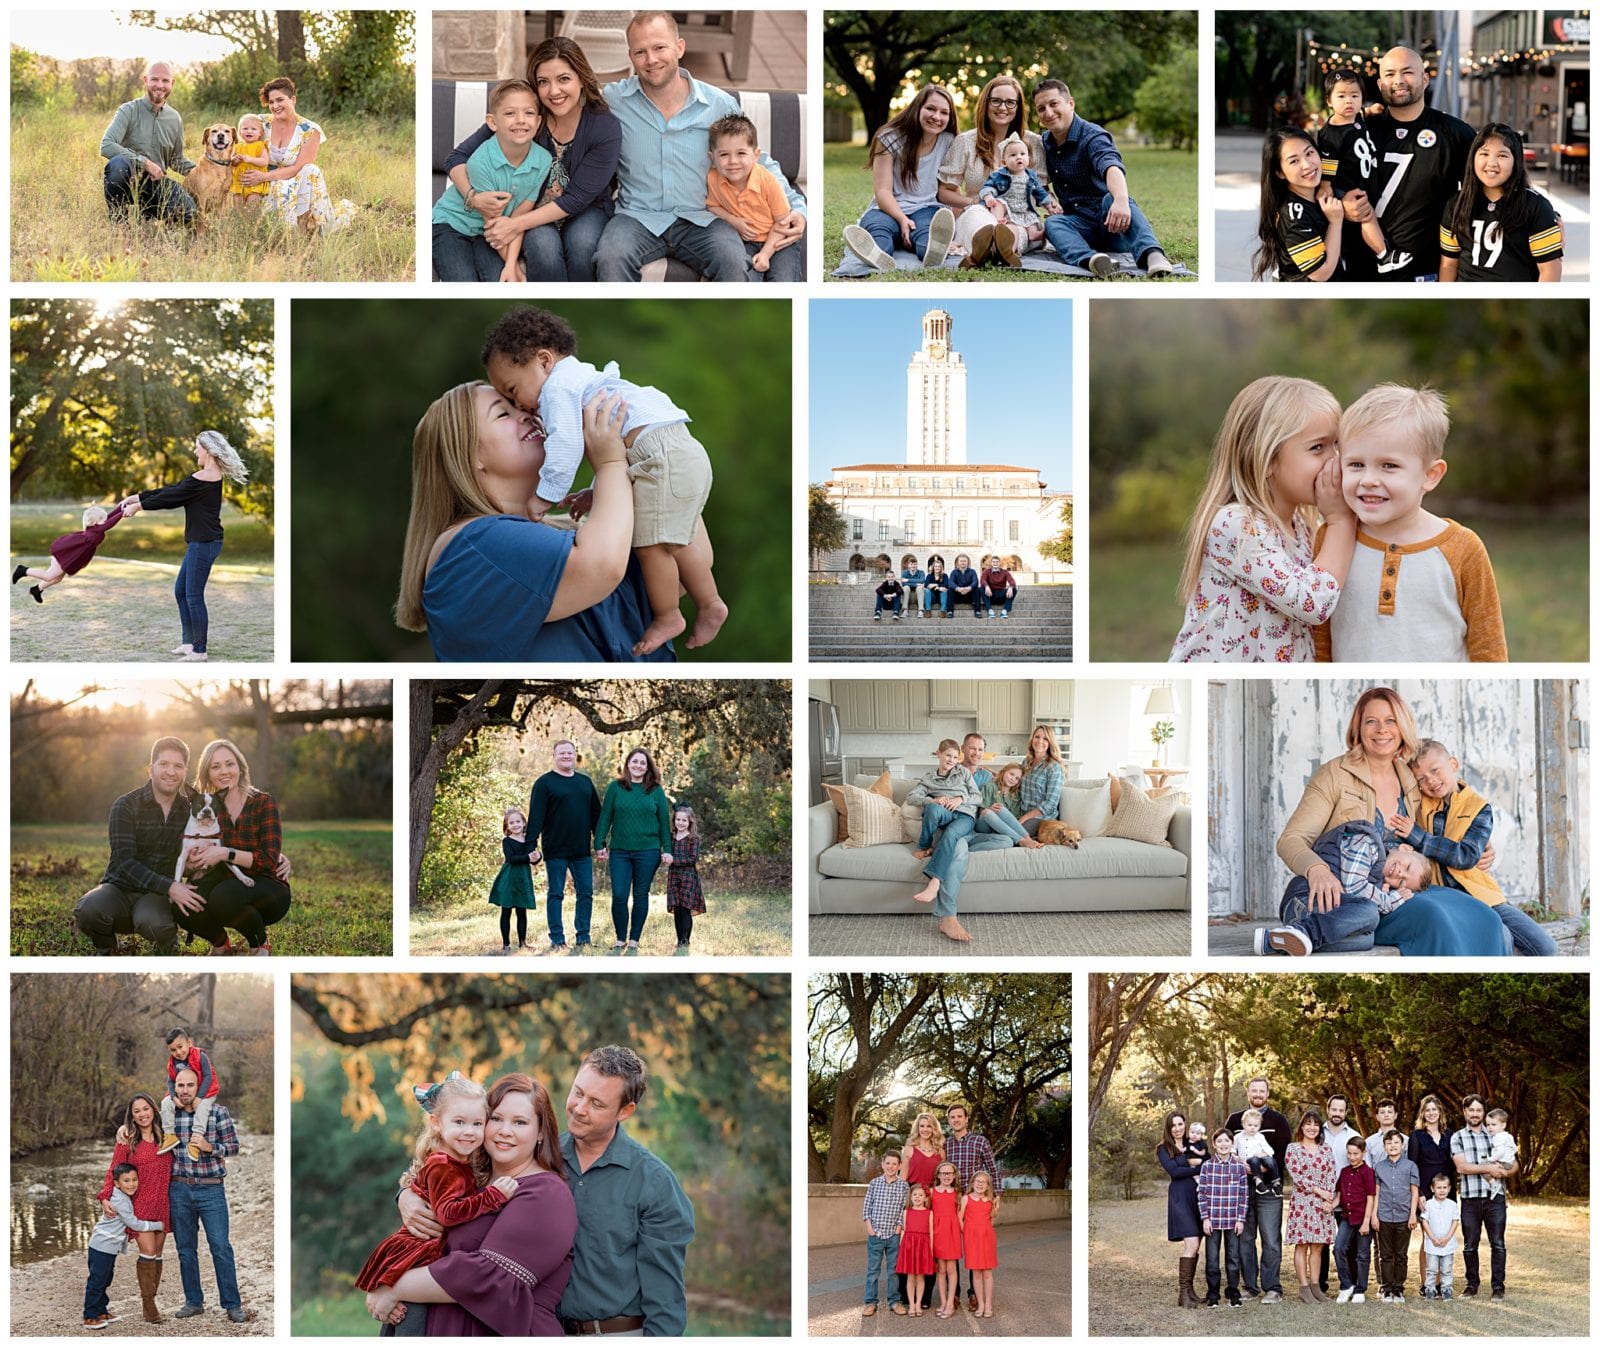 Austin Family Photoshoots by Hello Photography